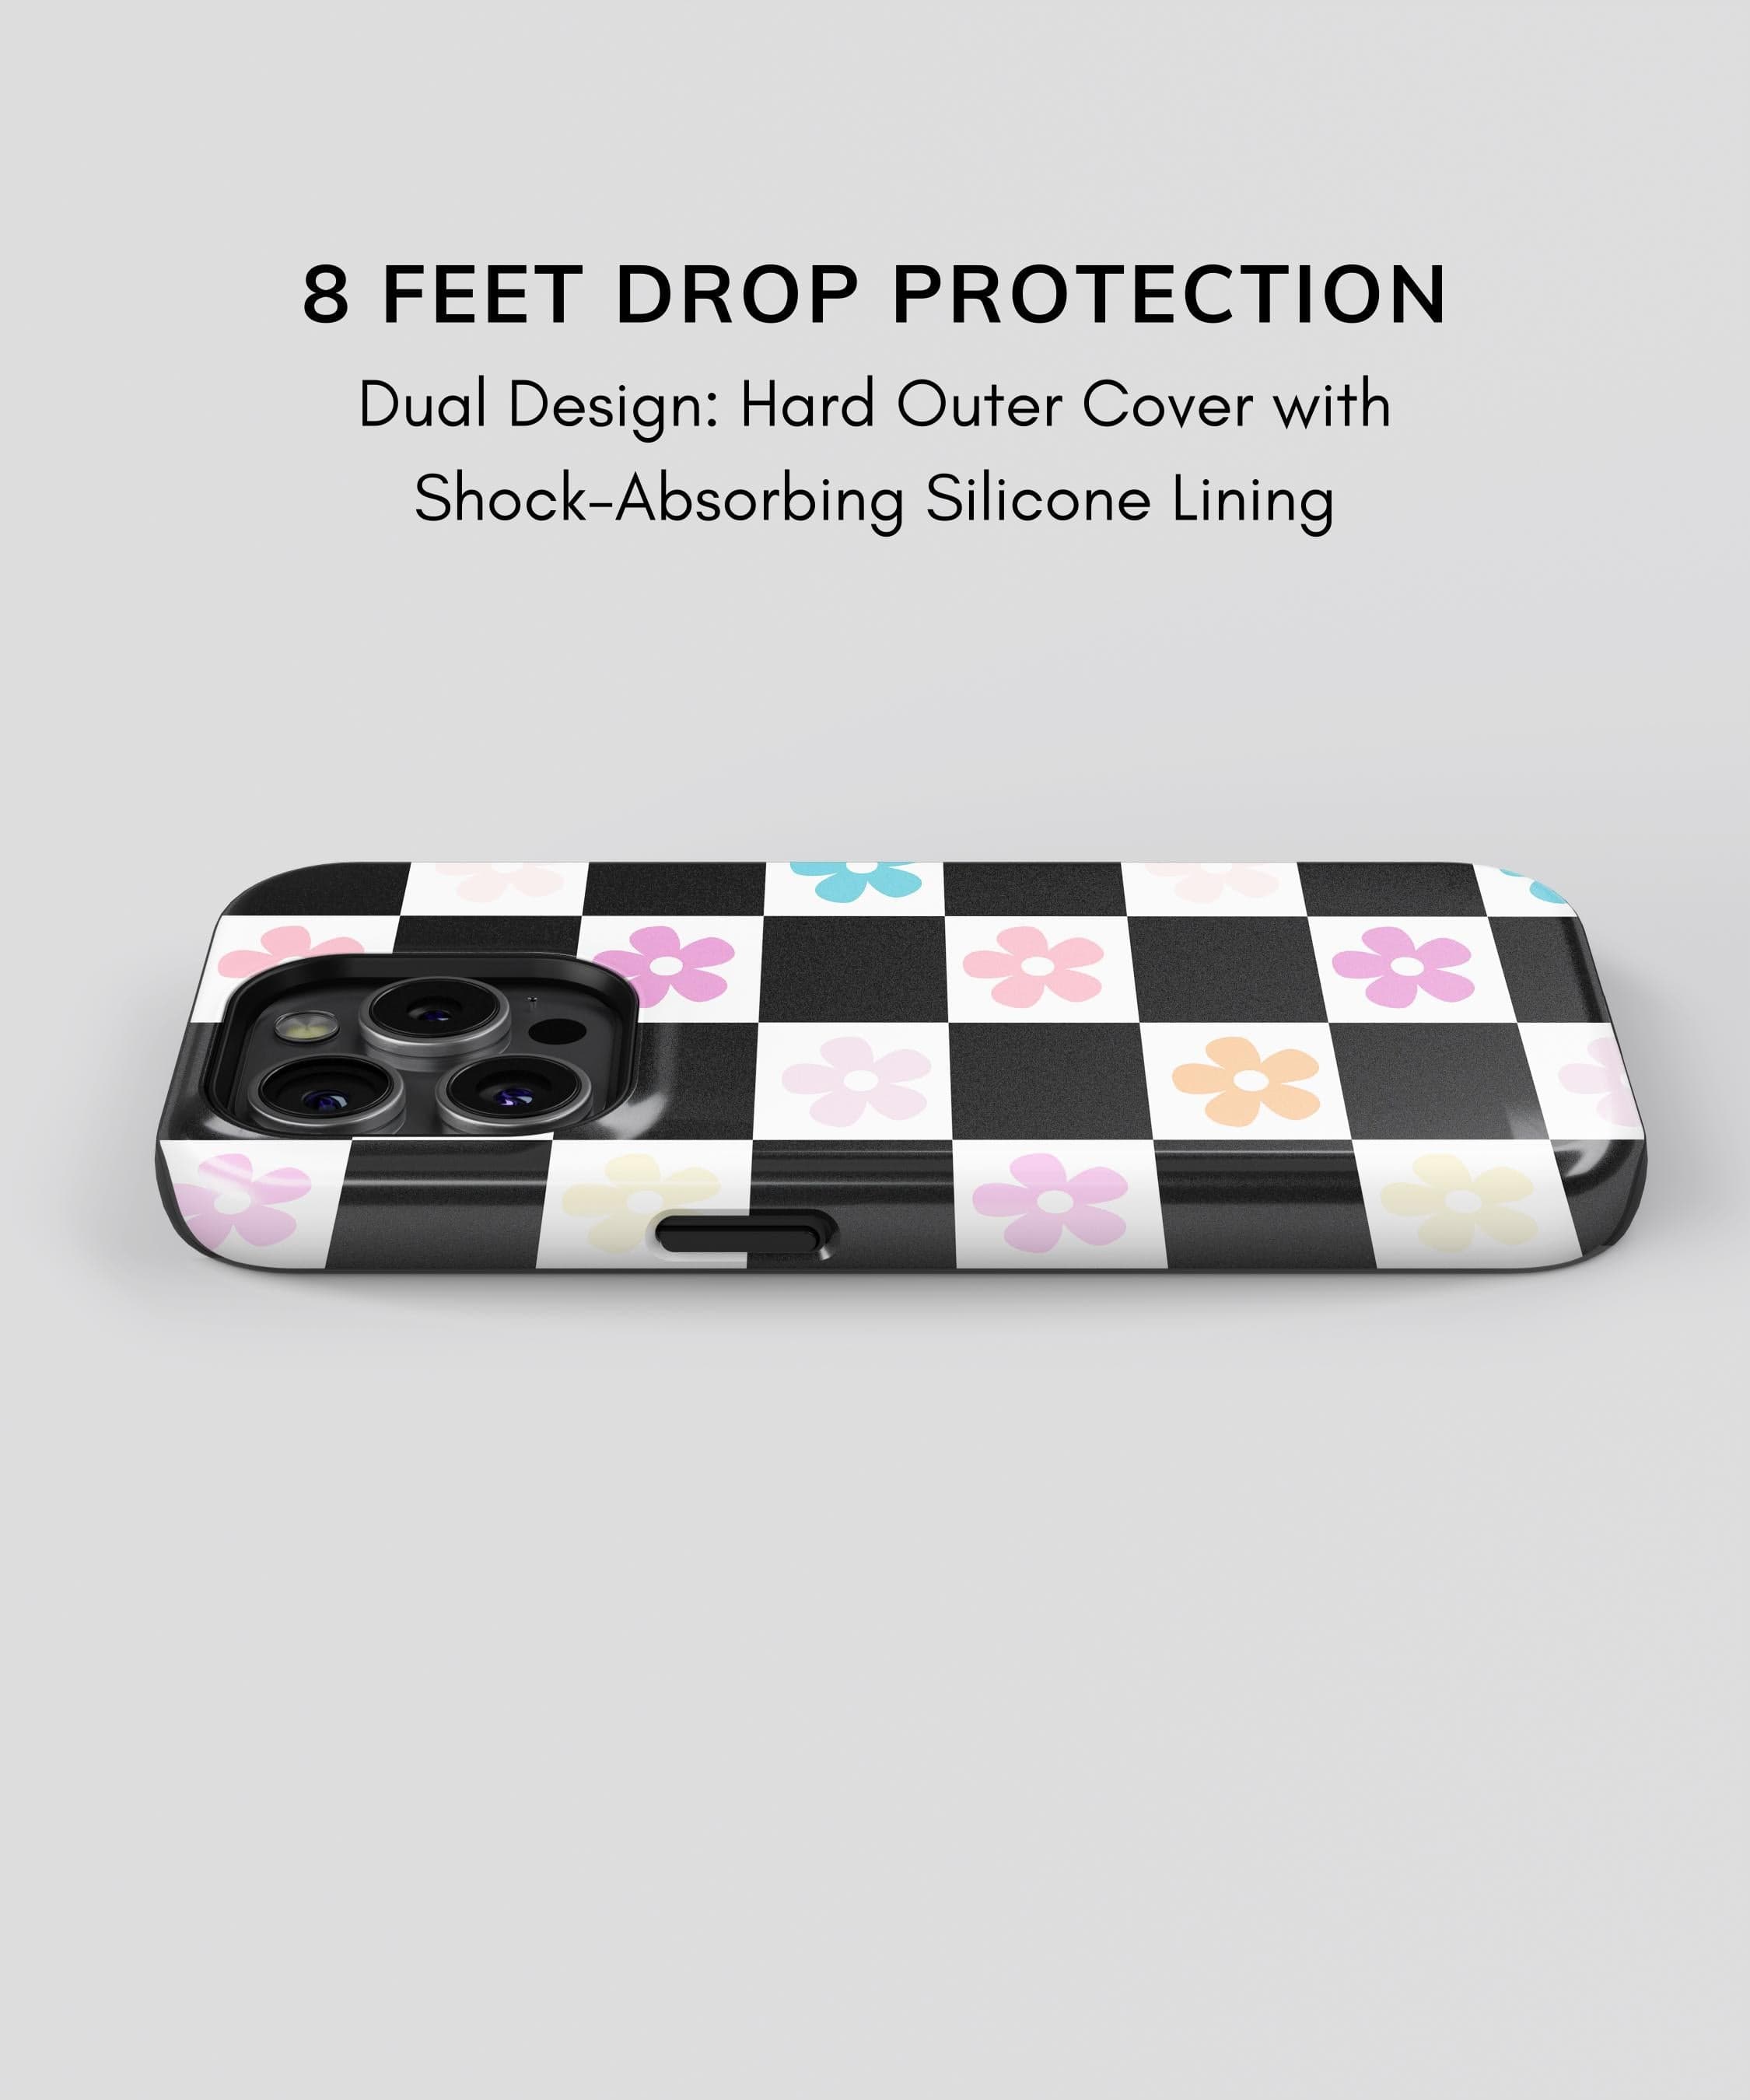 Checkered Daisy iPhone Case